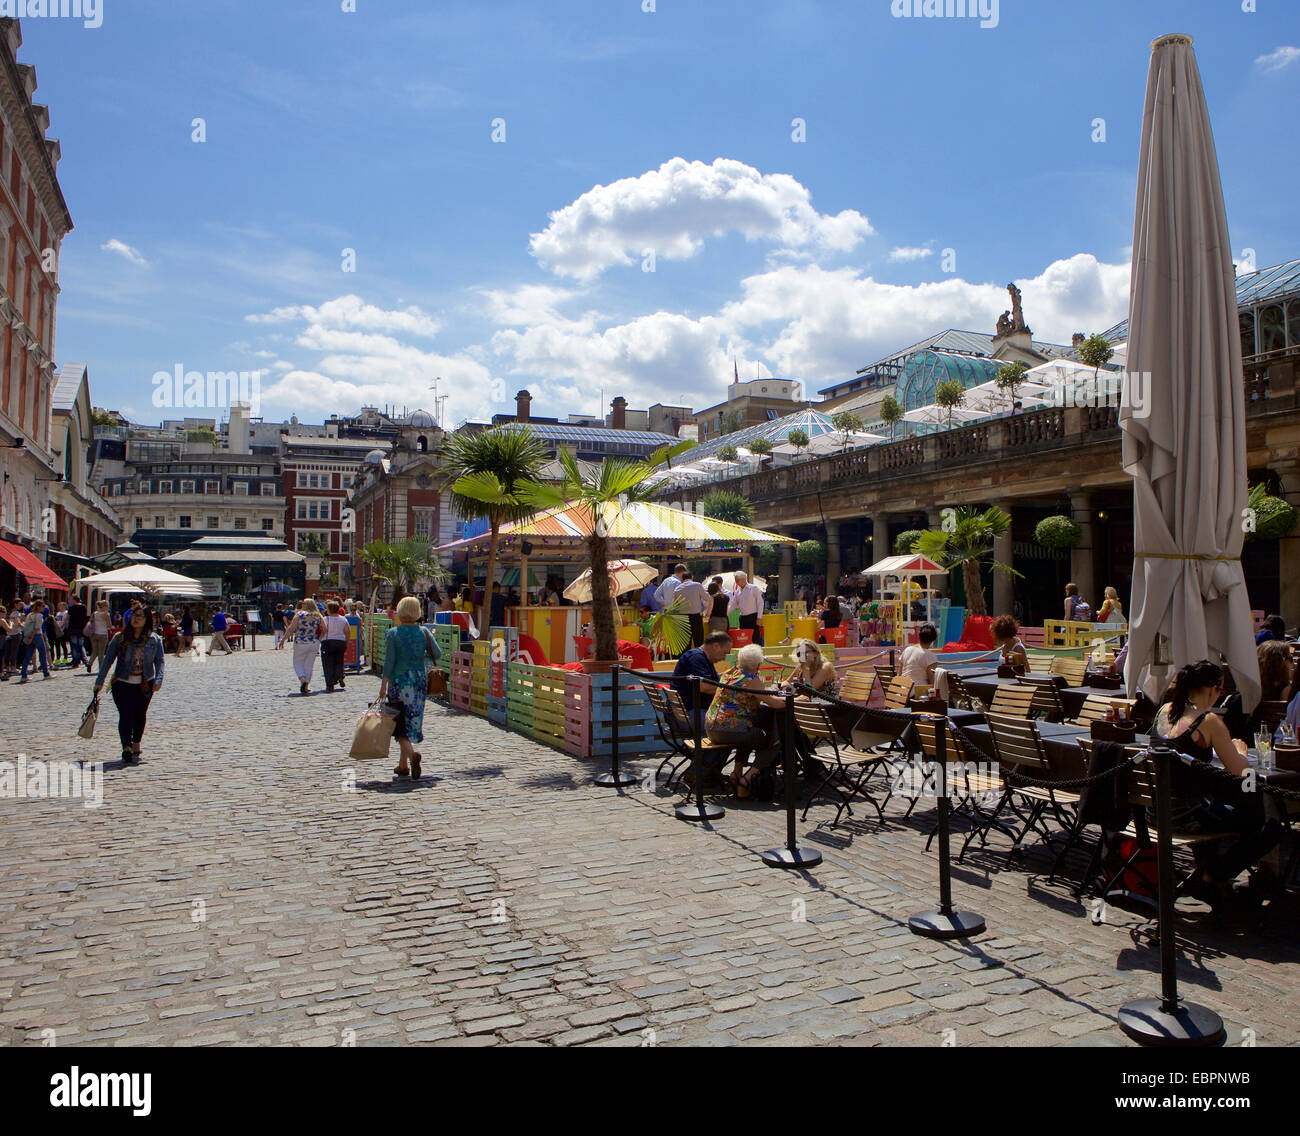 Covent Garden Market, London, England, United Kingdom, Europe Stock Photo